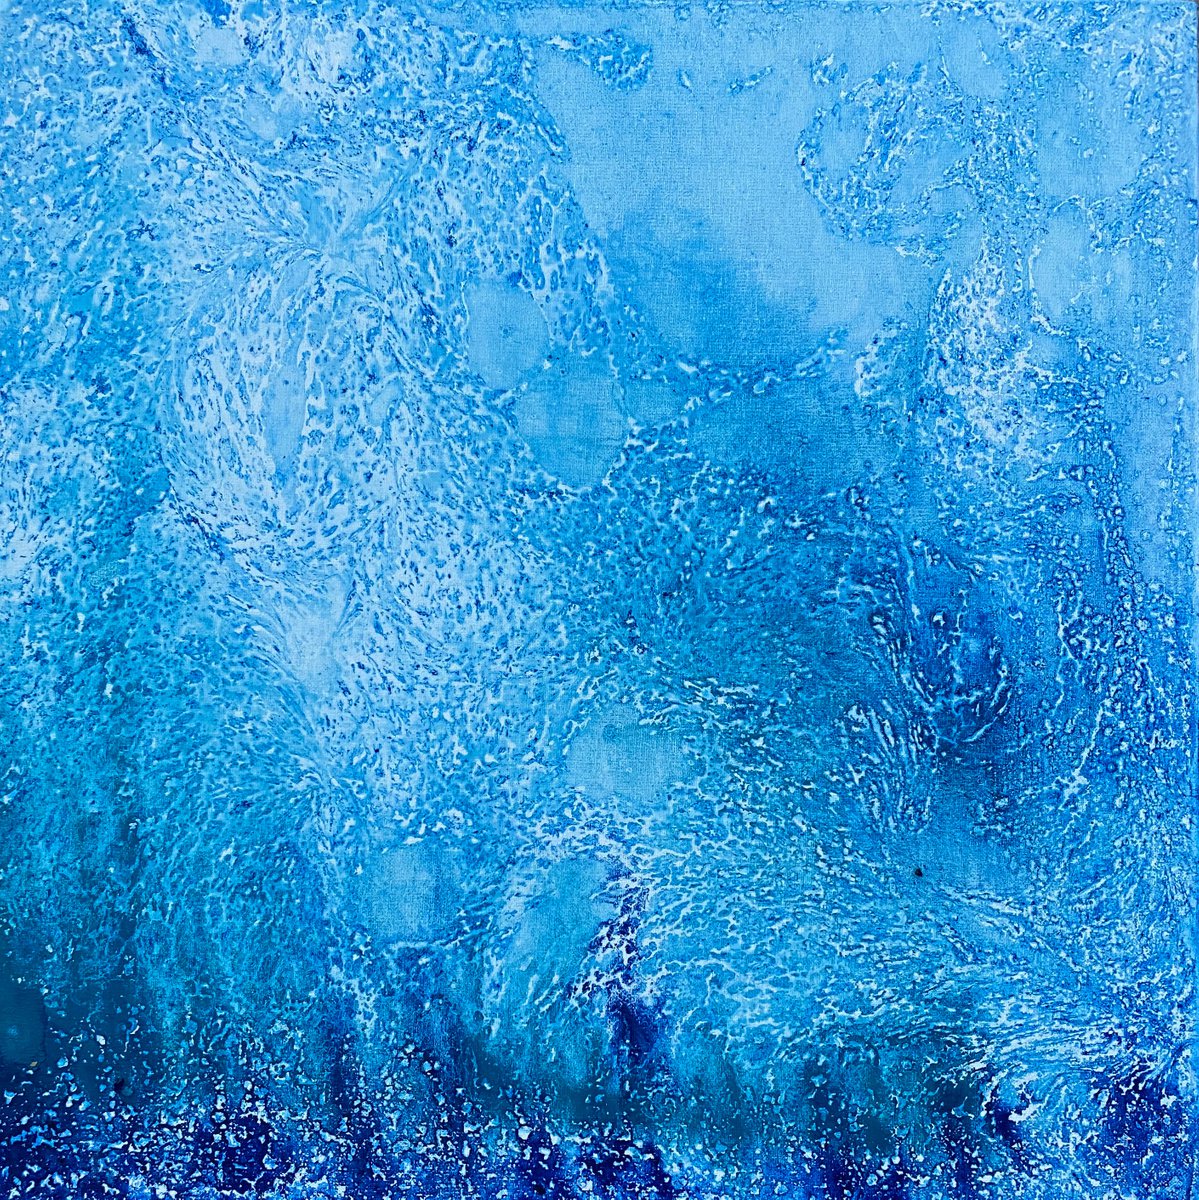 Blue abstract painting 2205202010 by Natalya Burgos